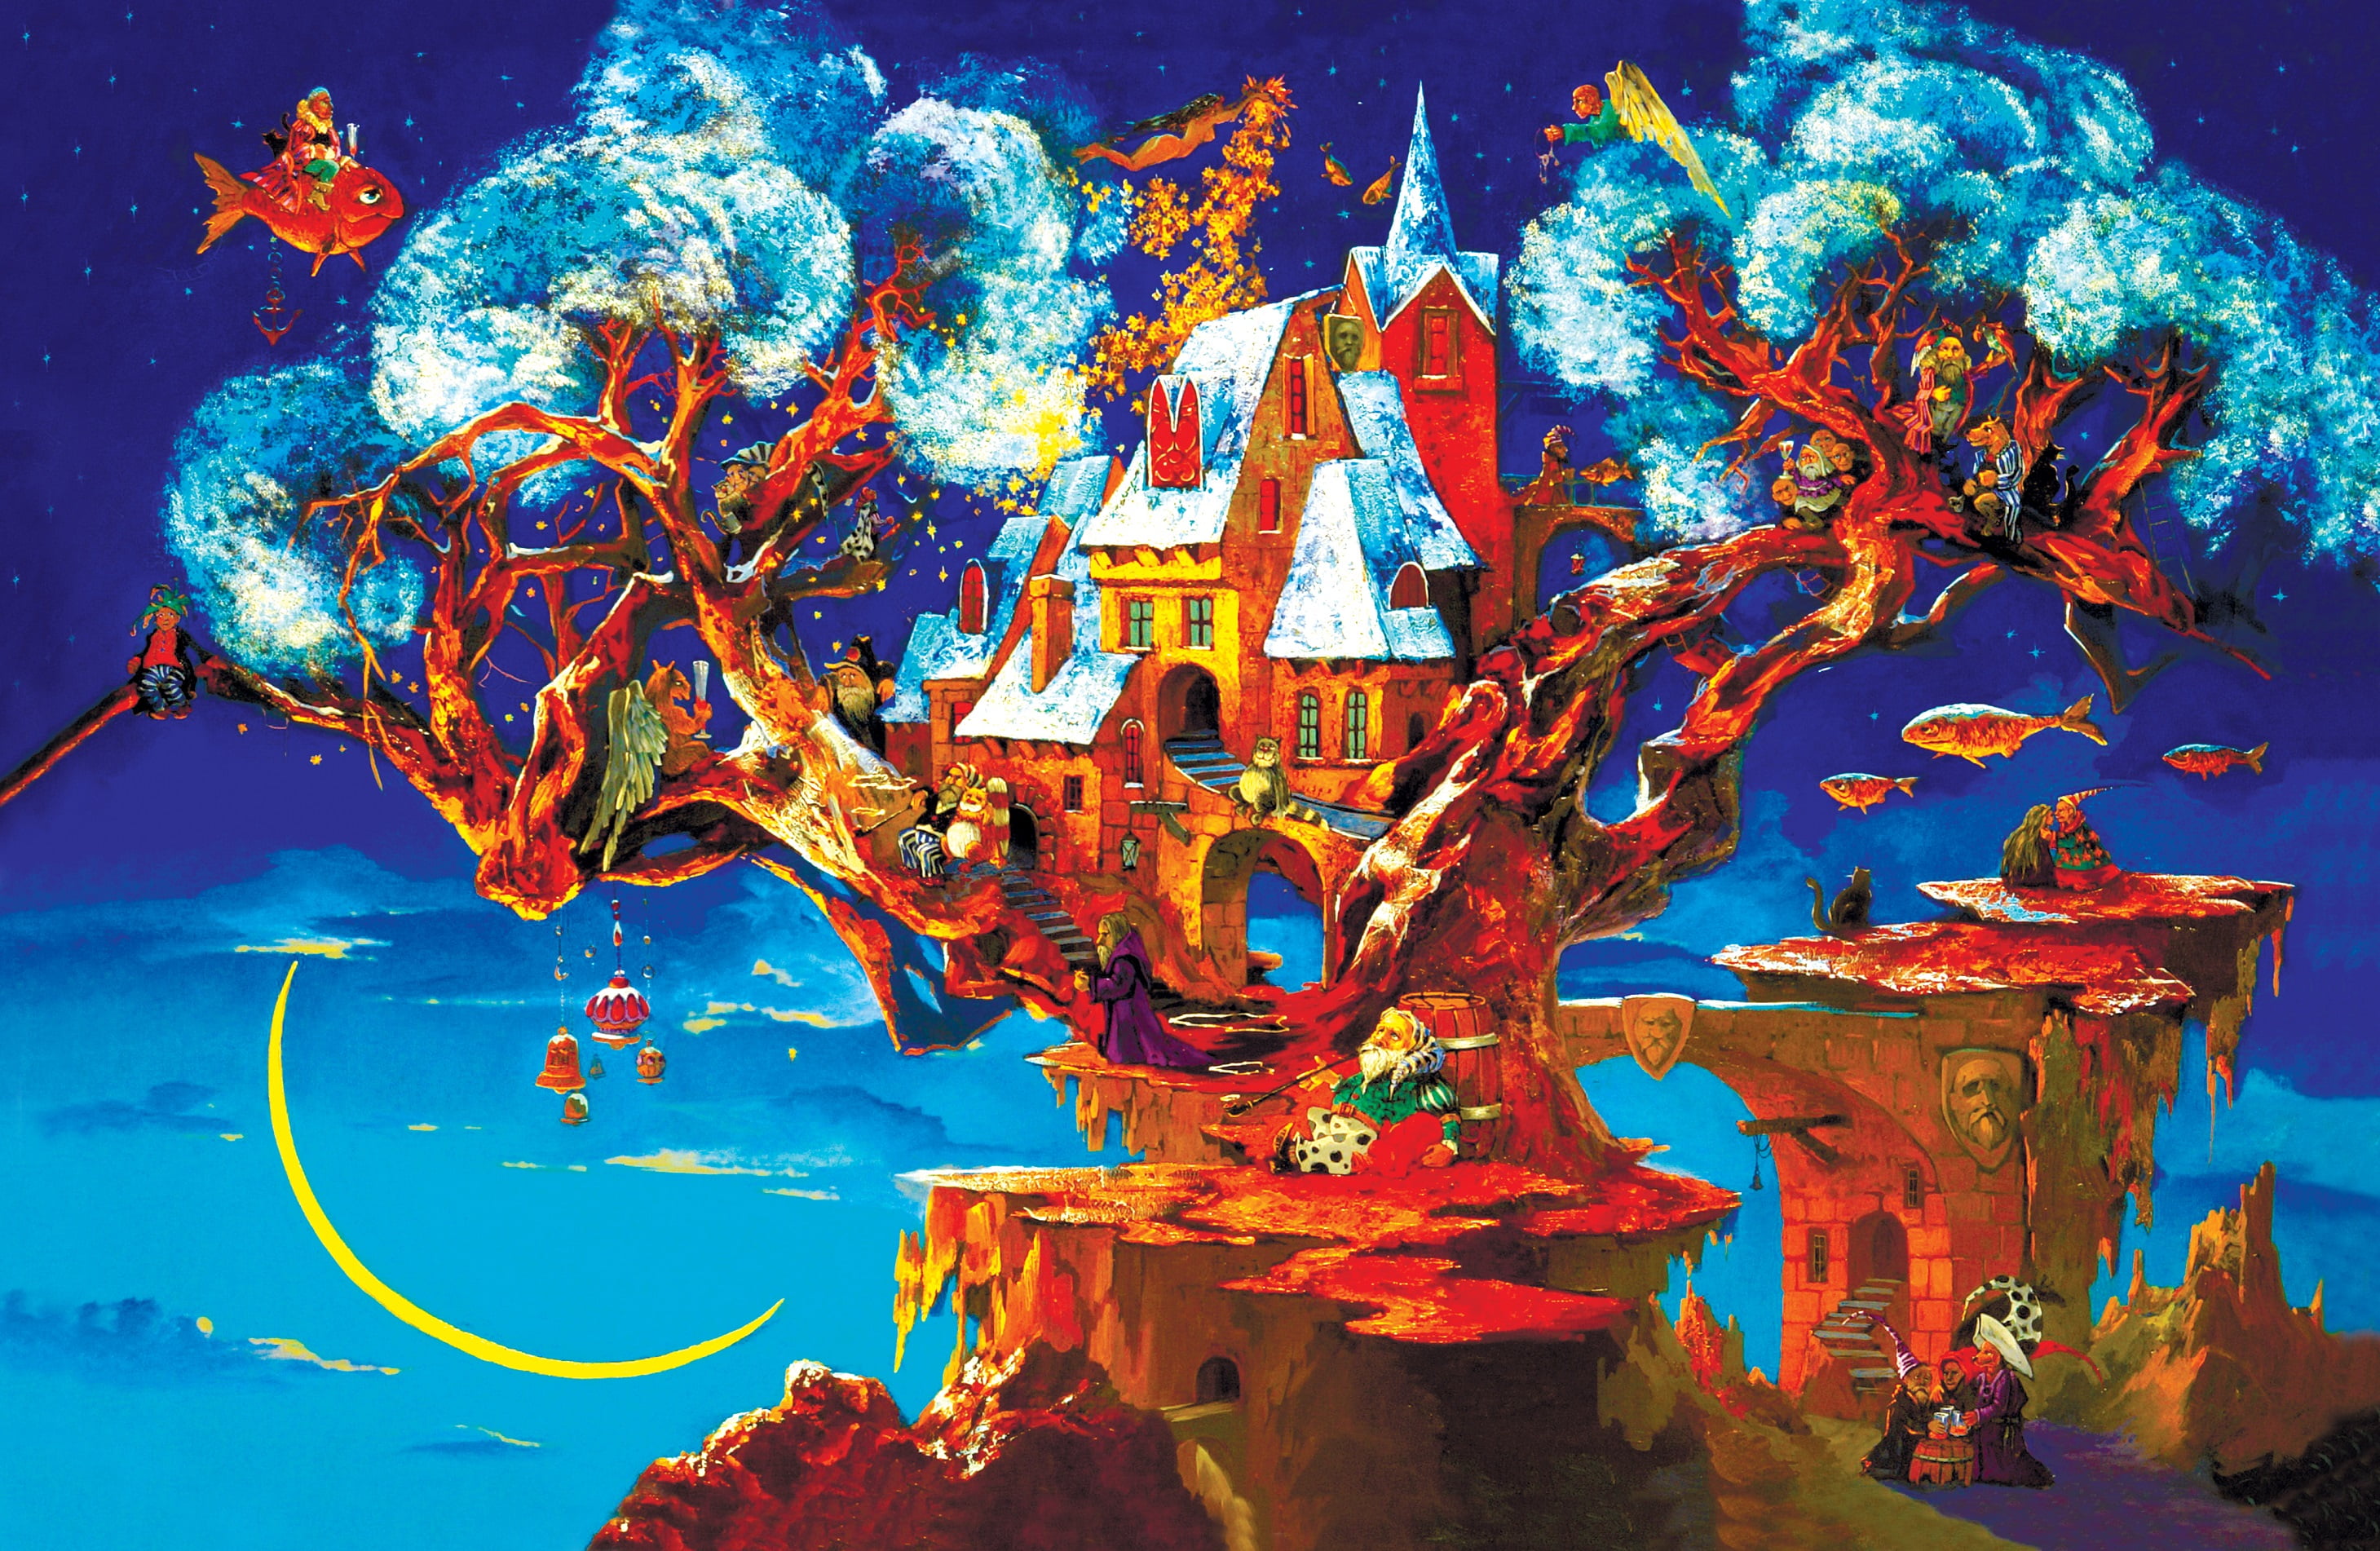 pegasus wooden puzzle "Tree of dreams" 193 pcs angels and gnomes